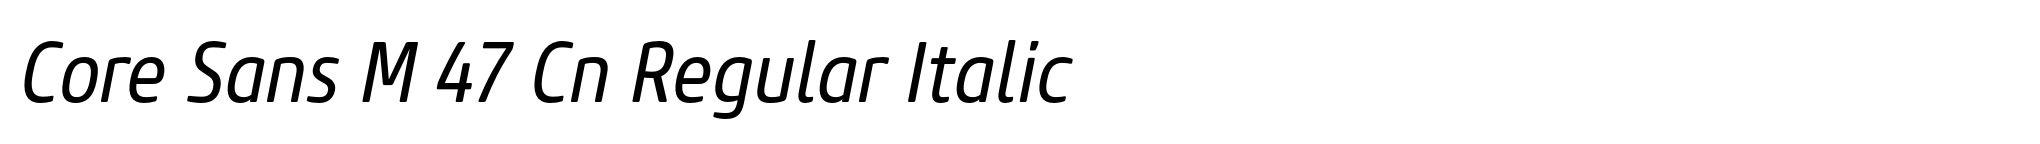 Core Sans M 47 Cn Regular Italic image